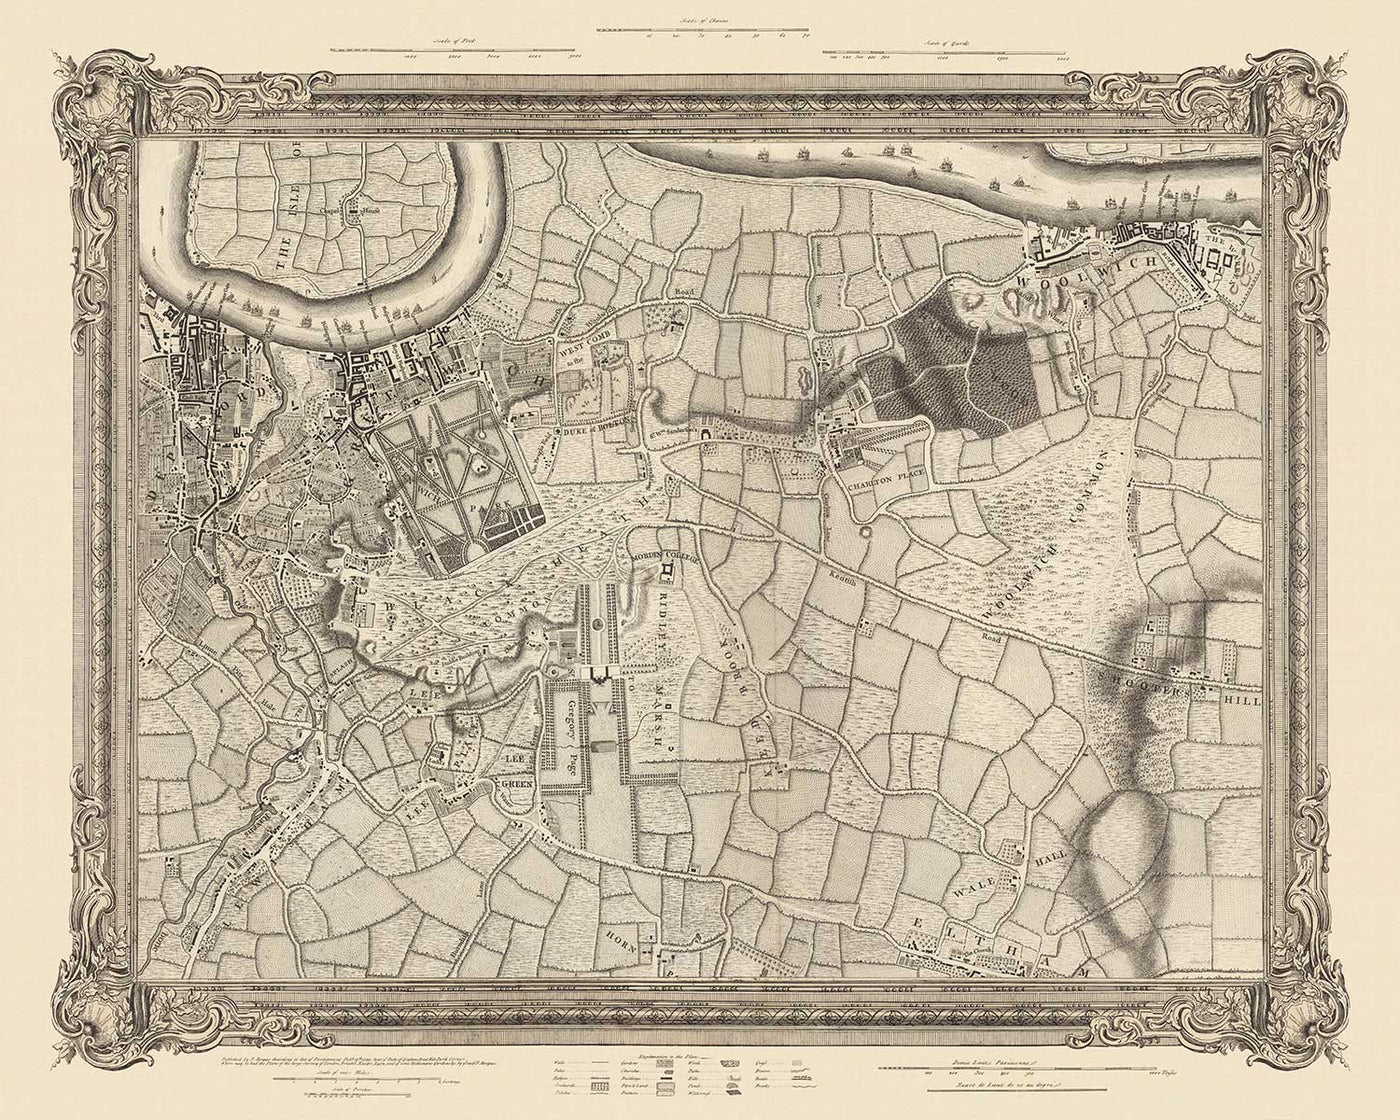 Ancienne carte du sud-est de Londres en 1746 par John Rocque - Lewisham, Woolwich, Greenwich, Eltham, Deptford, SE8, SE14, SE10, SE7, SE3, SE4, SE13